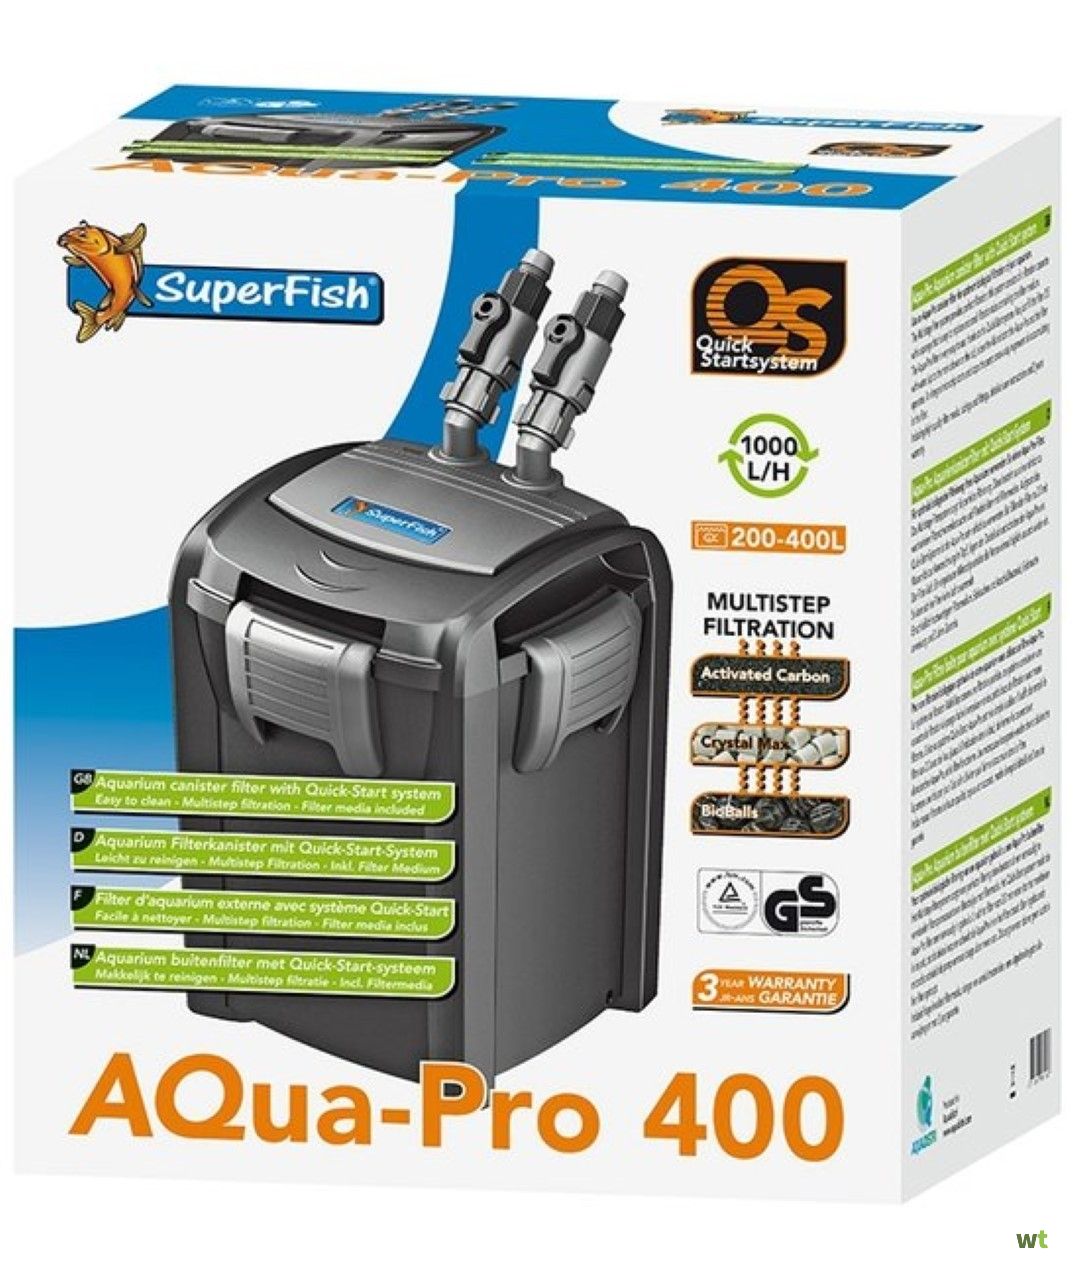 Aqua-Pro liter SuperFish